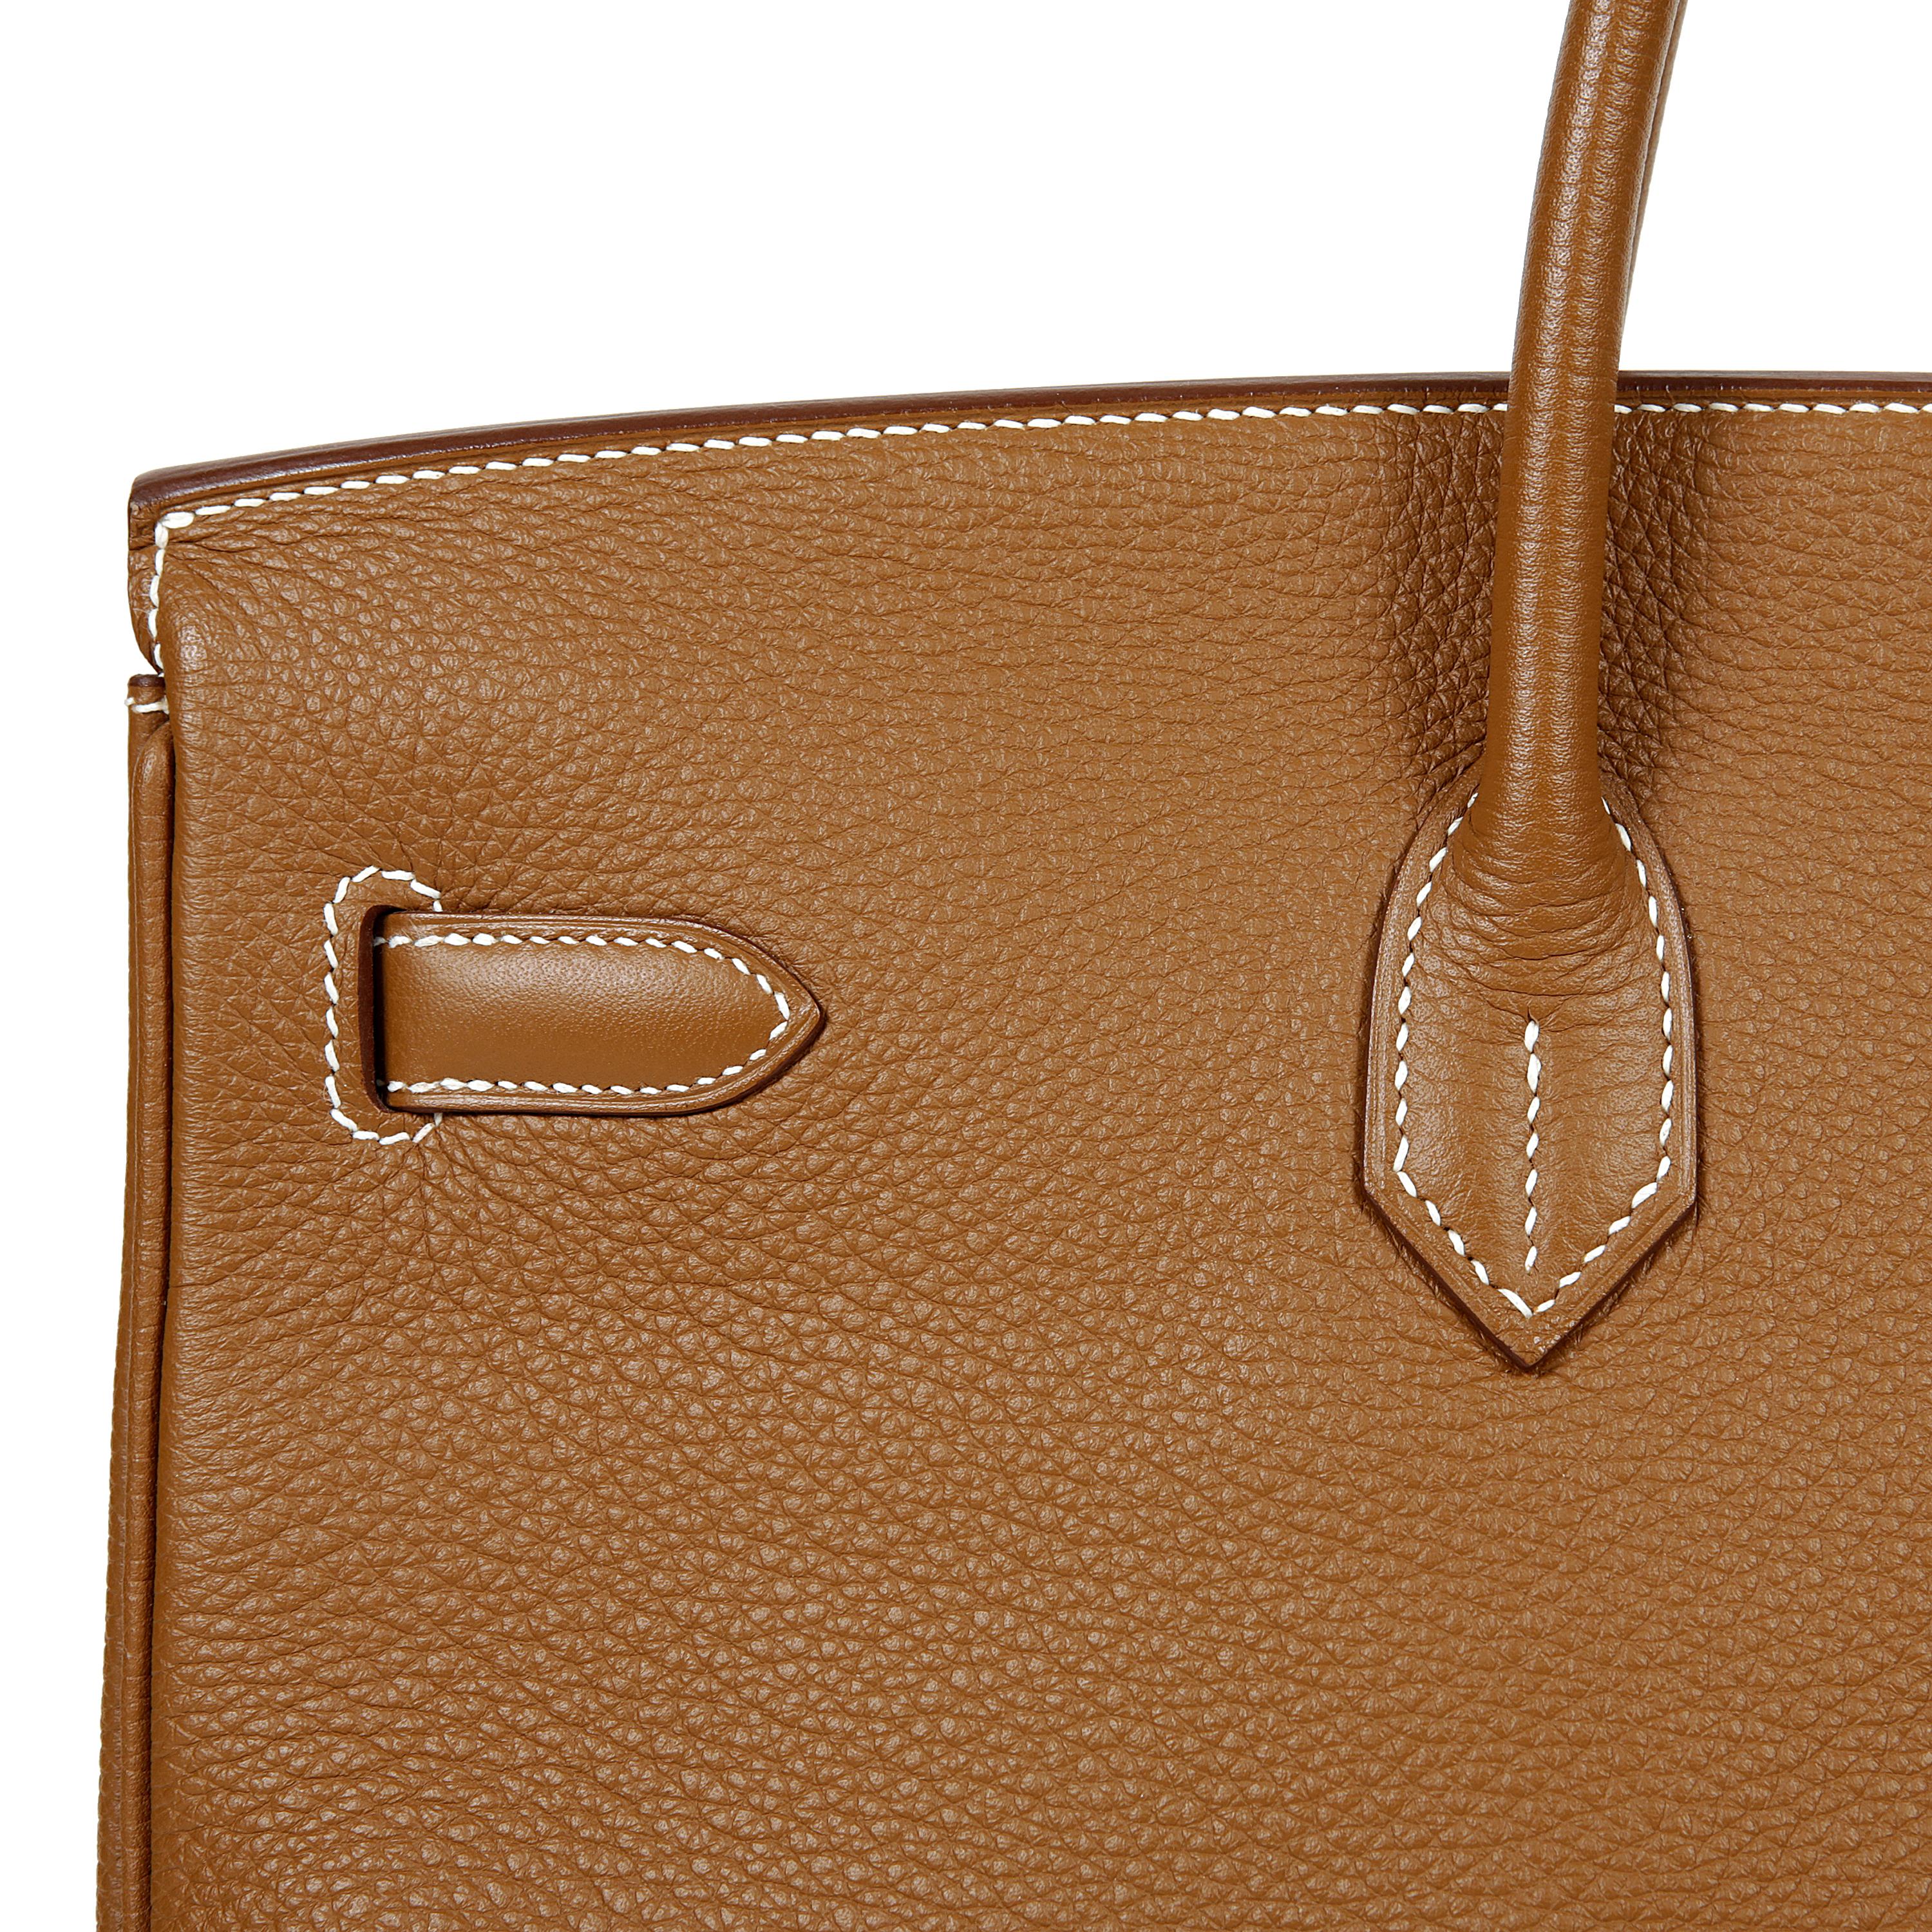 Hermès Gold Togo 40 cm Birkin Bag 9